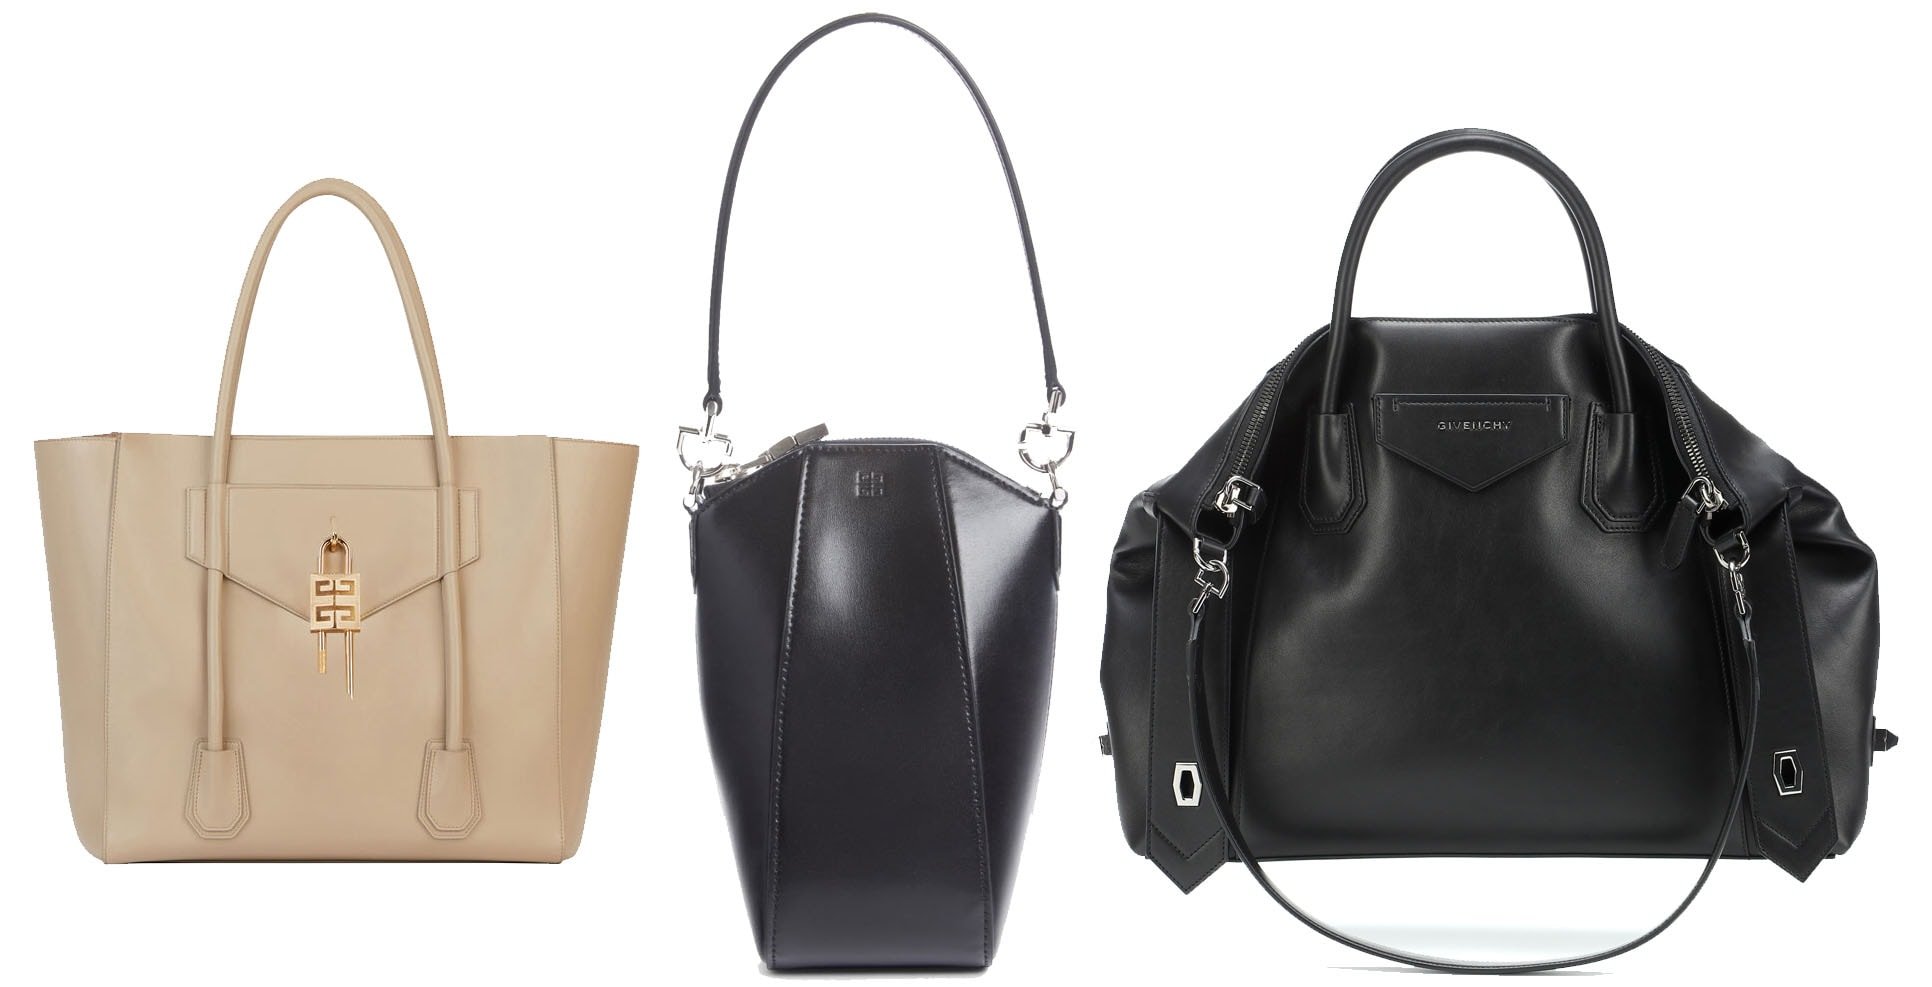 Givenchy Antigona soft shopper bag (left), mini vertical leather bag (middle), soft medium leather tote (right)